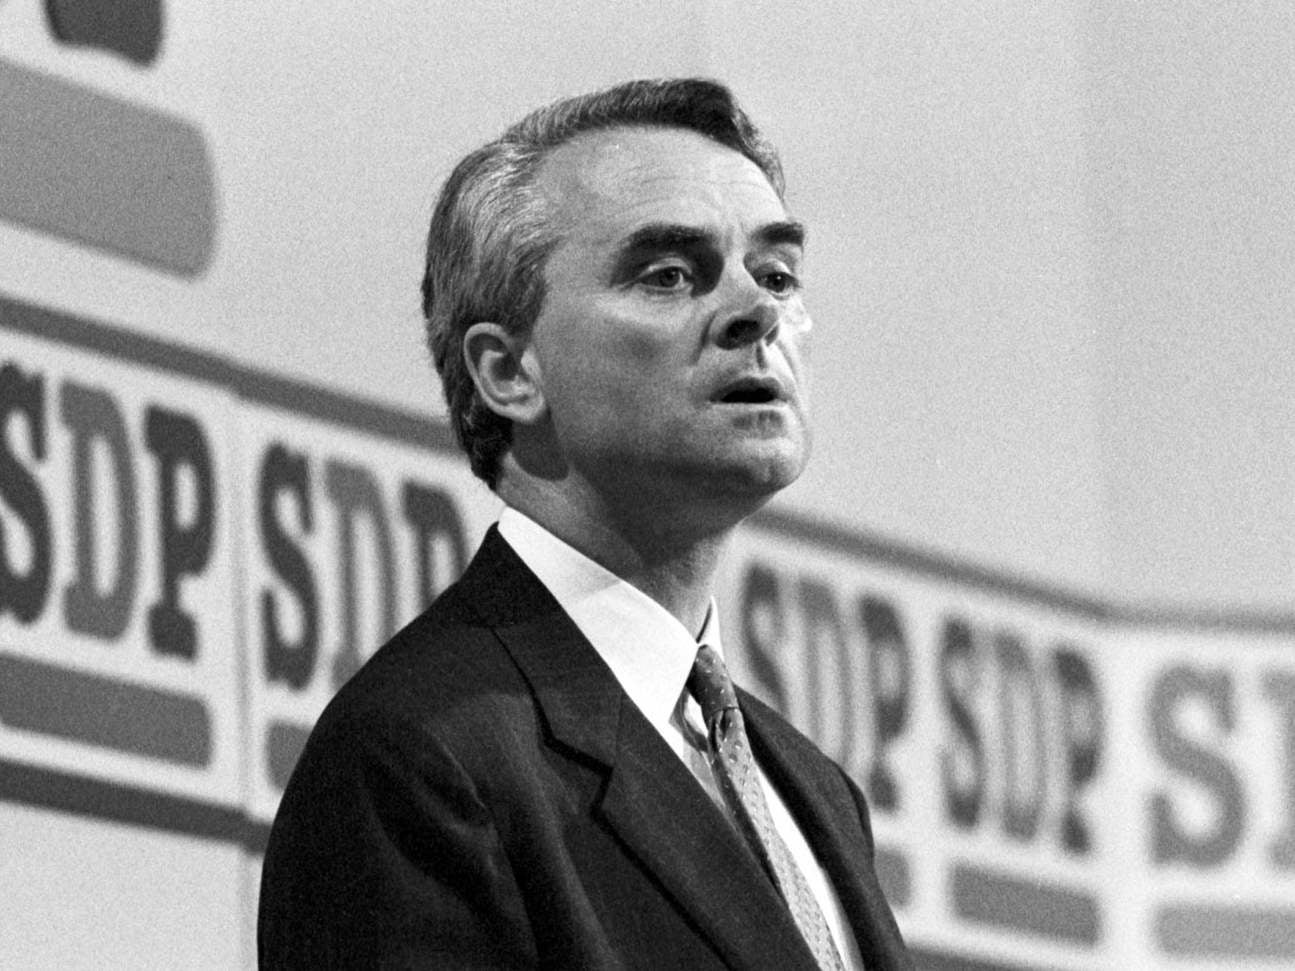 Maclennan make his first speech as SDP leader in 1987